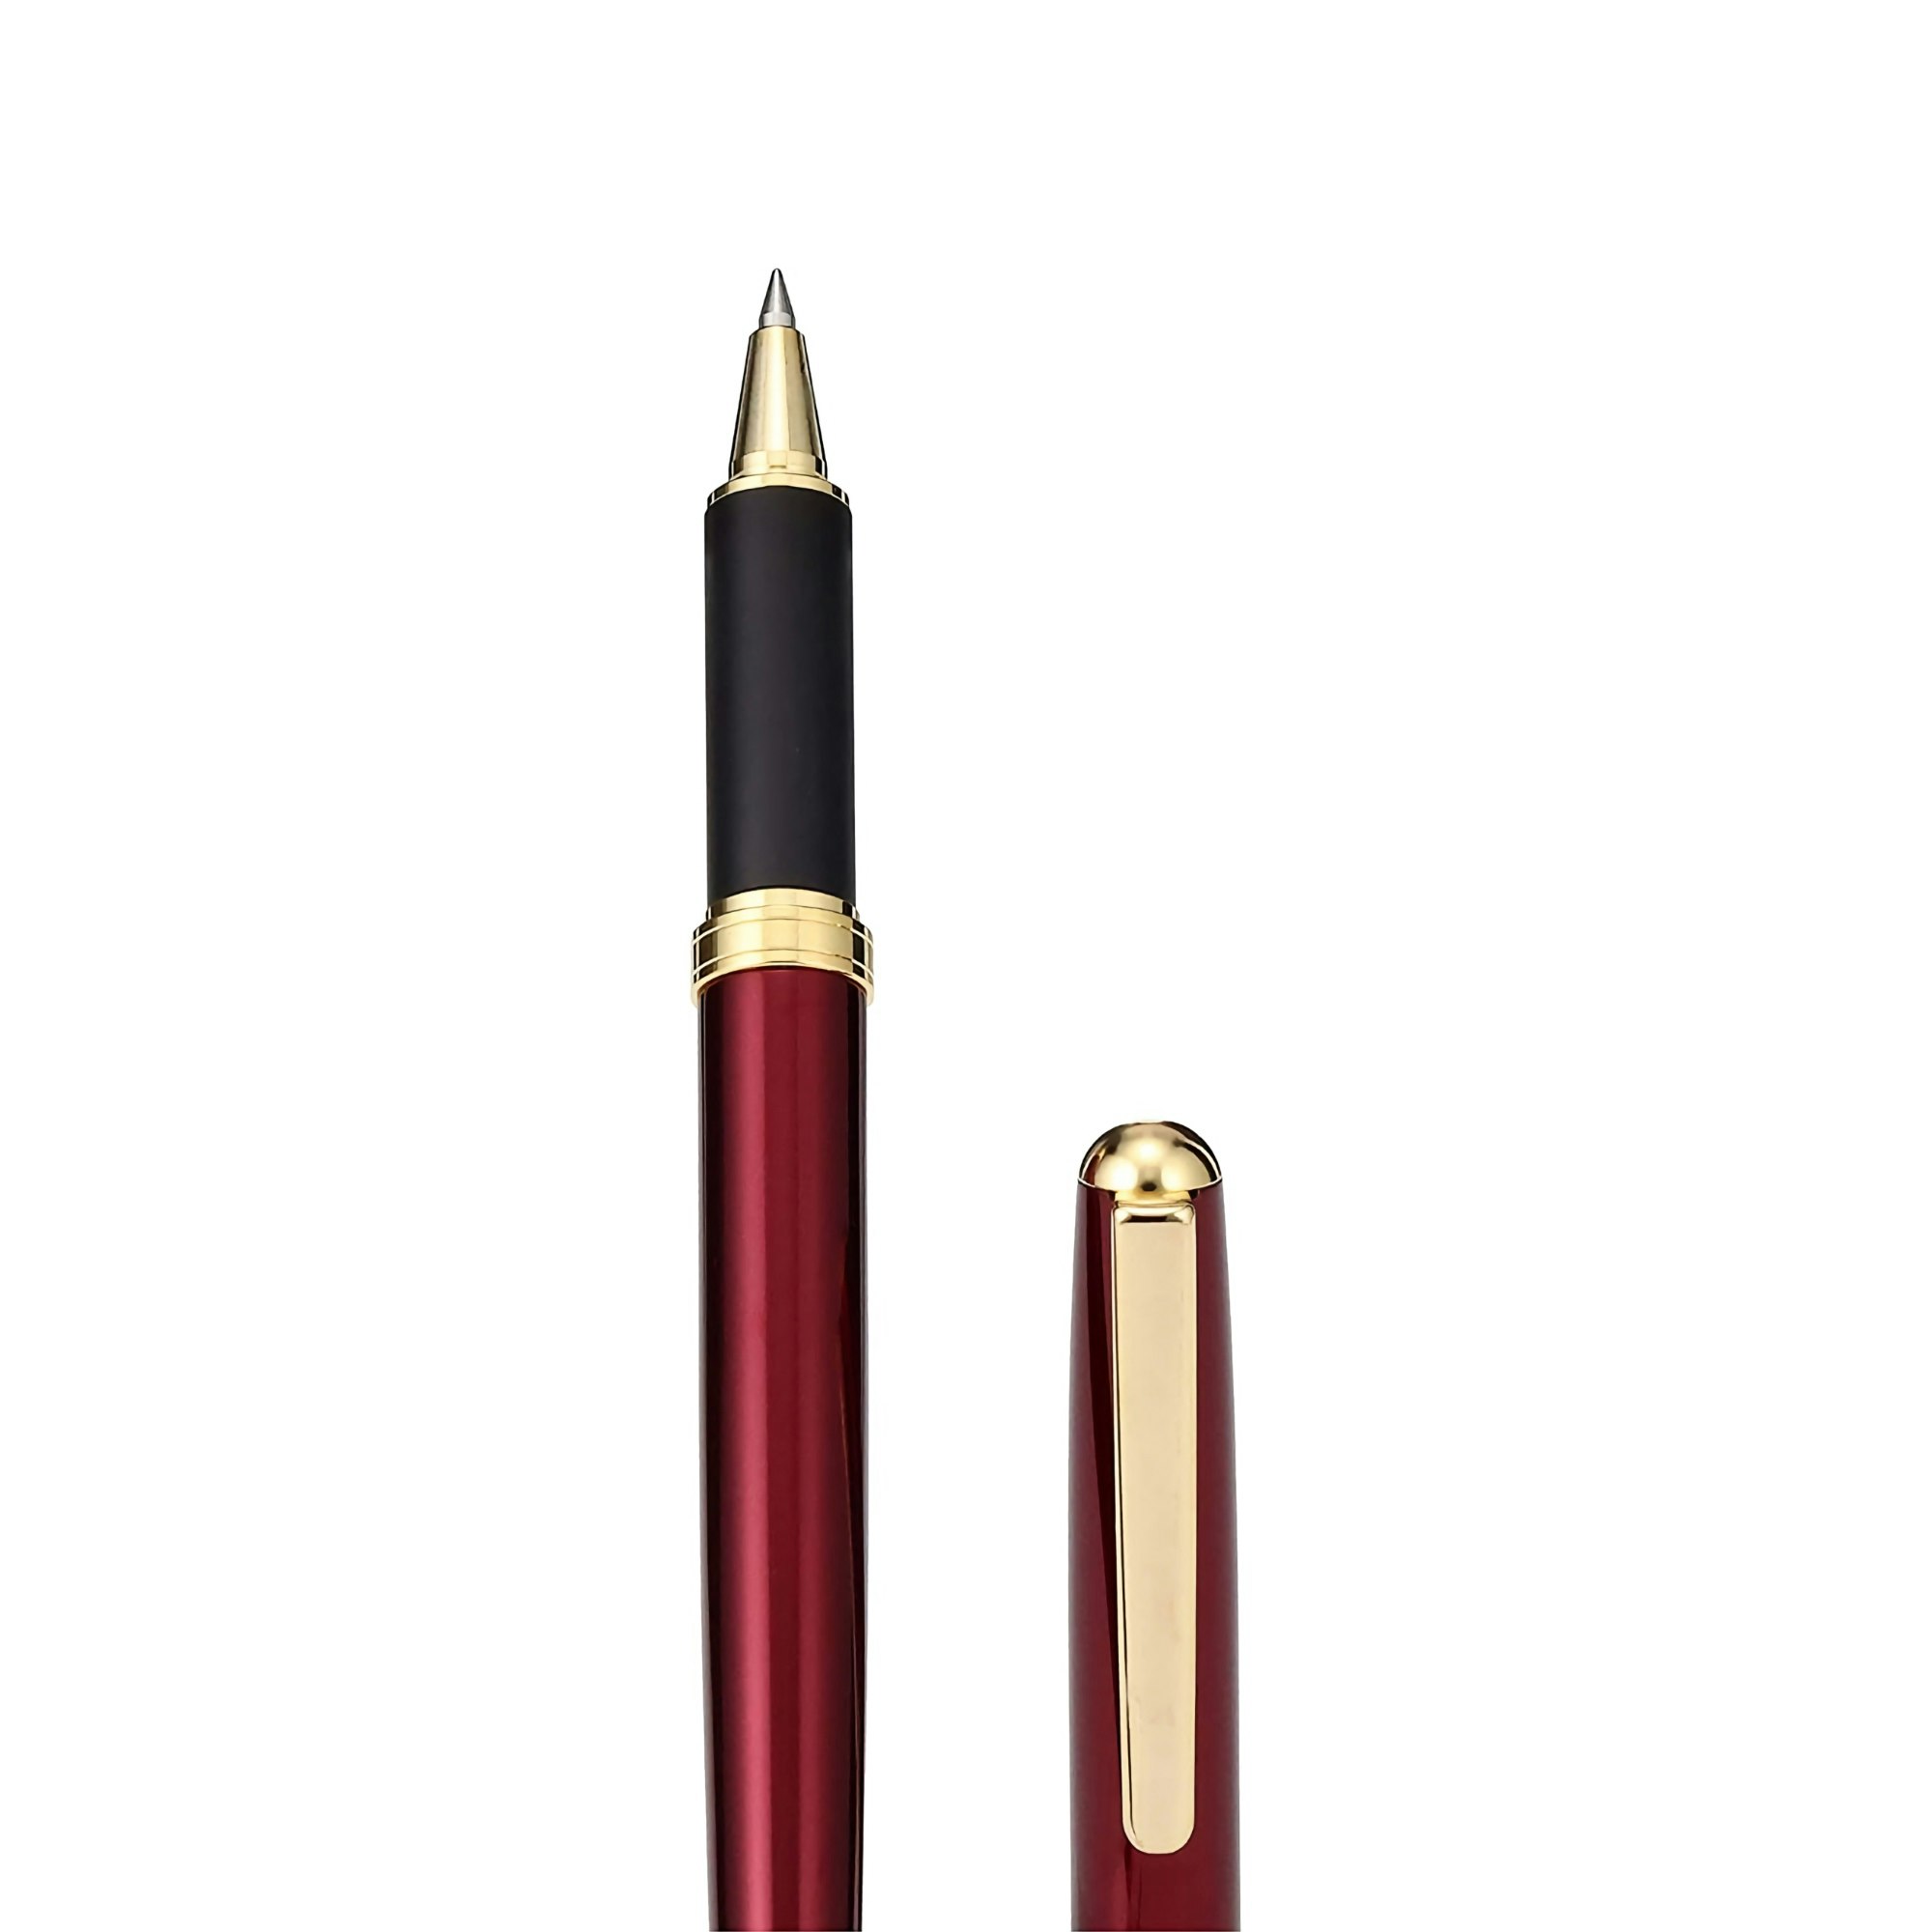 OHTO Liberty Ceramic Roller Pen